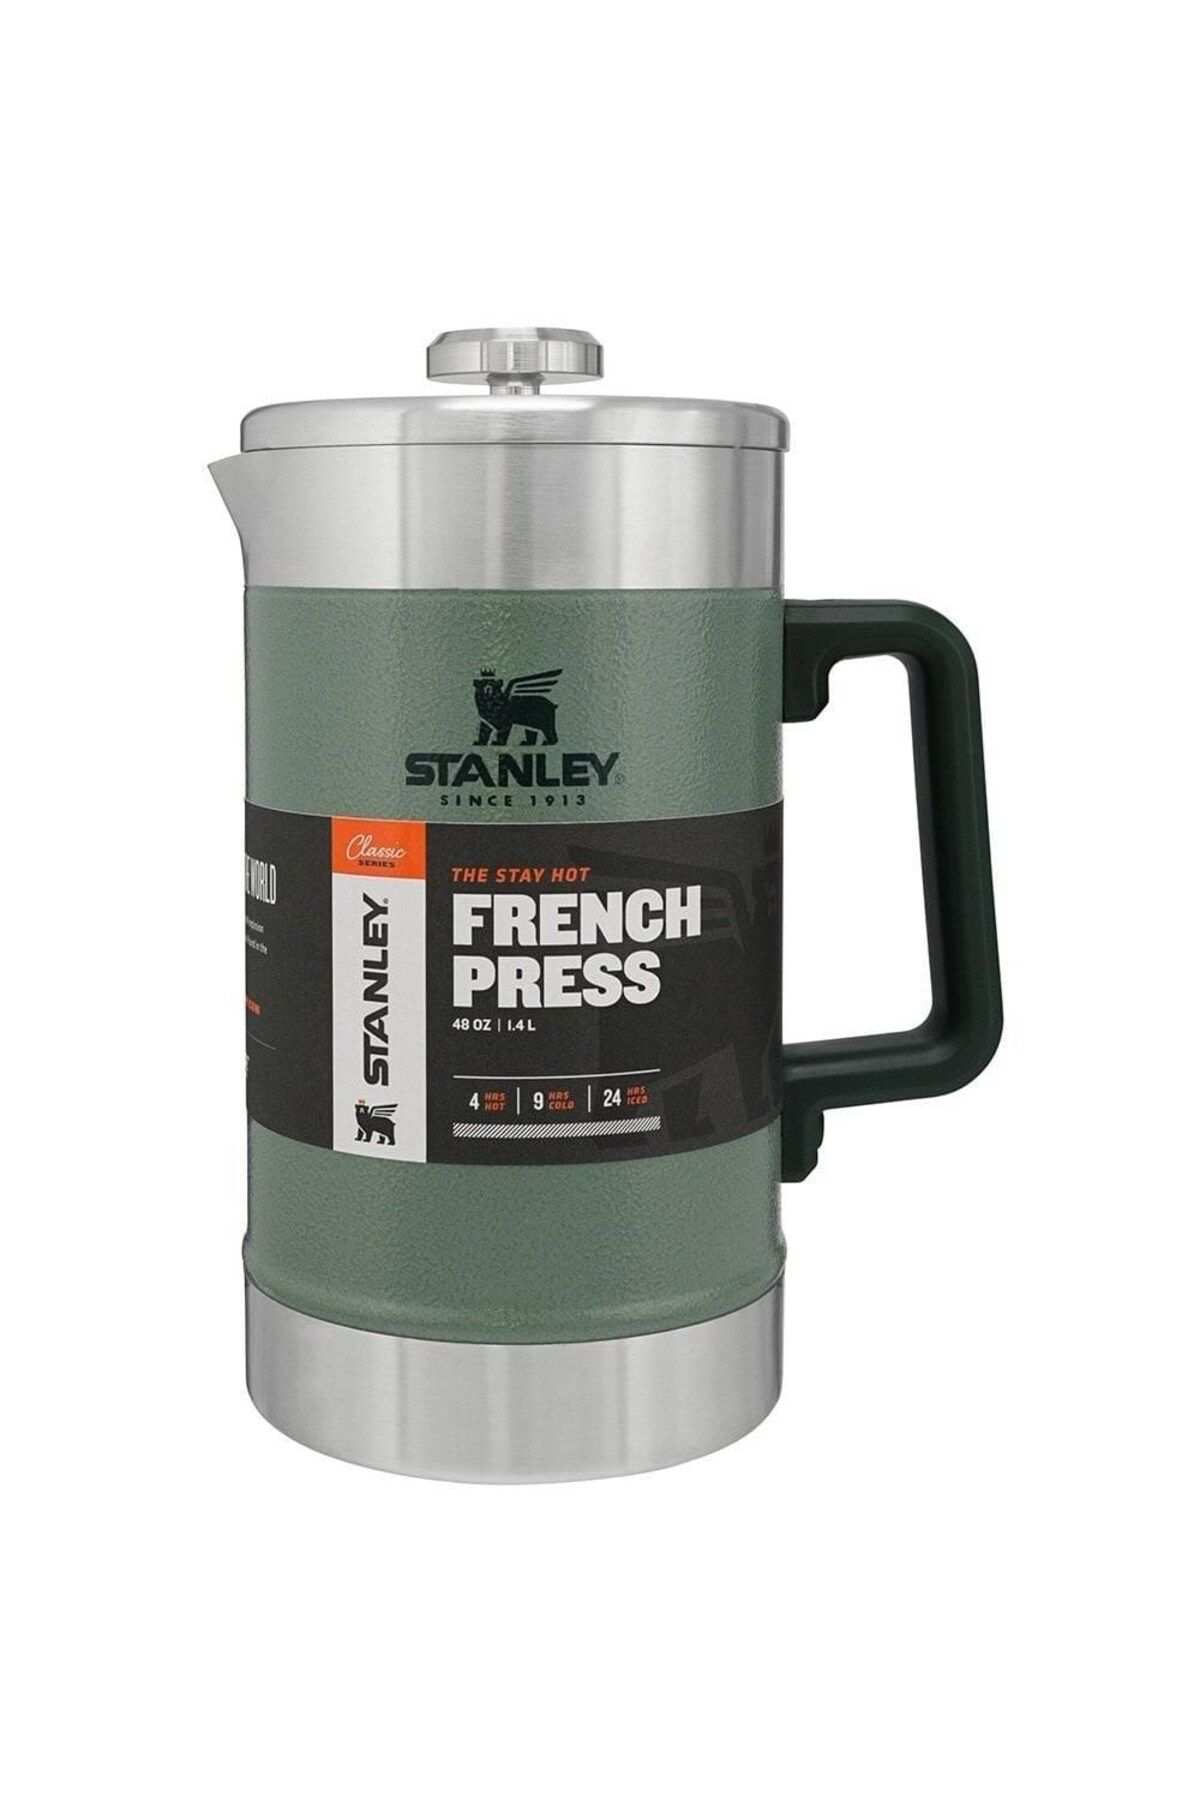 Stanley The Stay-Hot French Press Kahve Demleme 1.4L / 48oz 10-02888-048